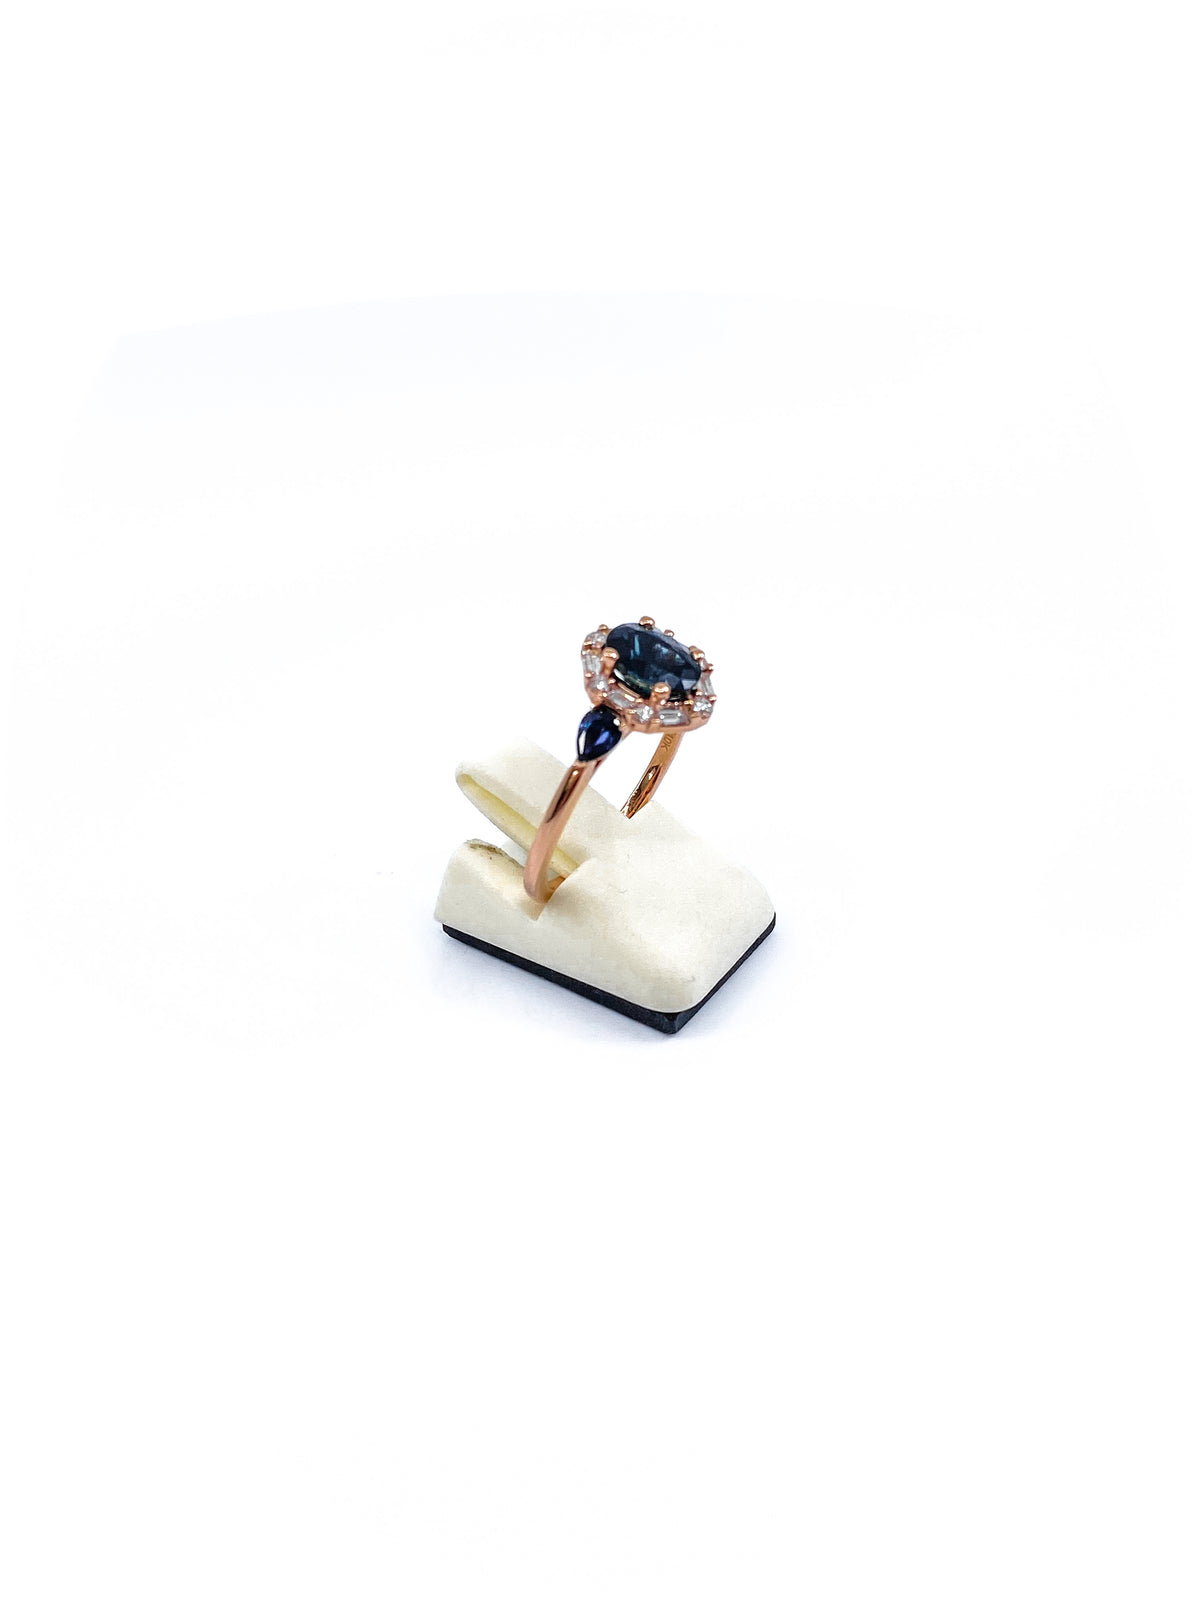 10K Rose Gold 1.50cttw Genuine Sapphire &amp; 0.30cttw Diamonds Ring, size 6.5